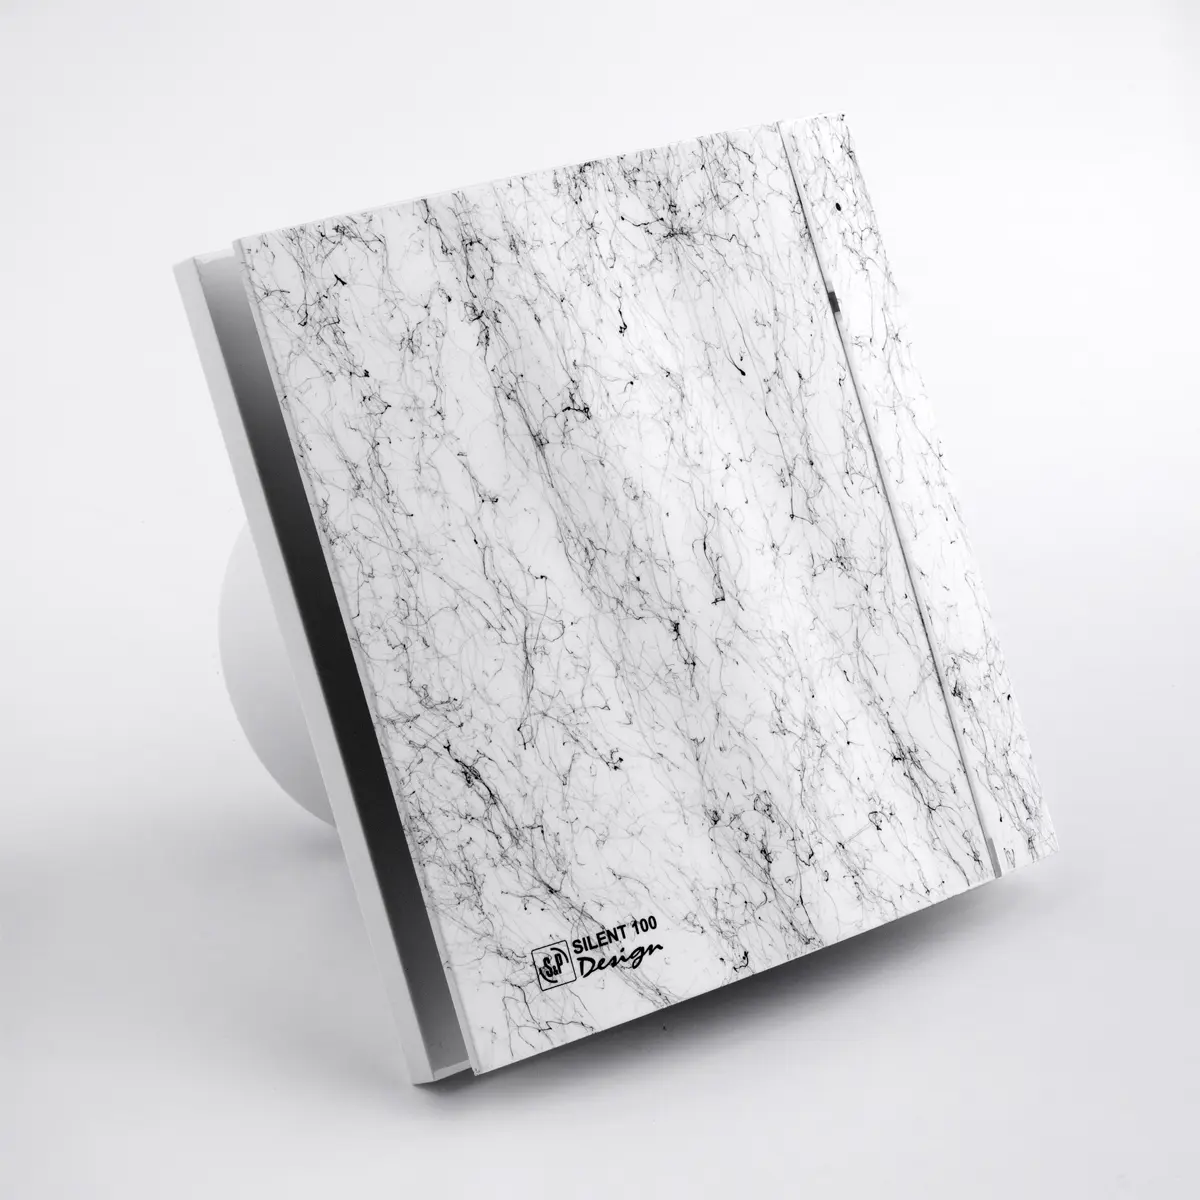 Накладной вентилятор soler&palau silent 100-cz marble white design 4-c